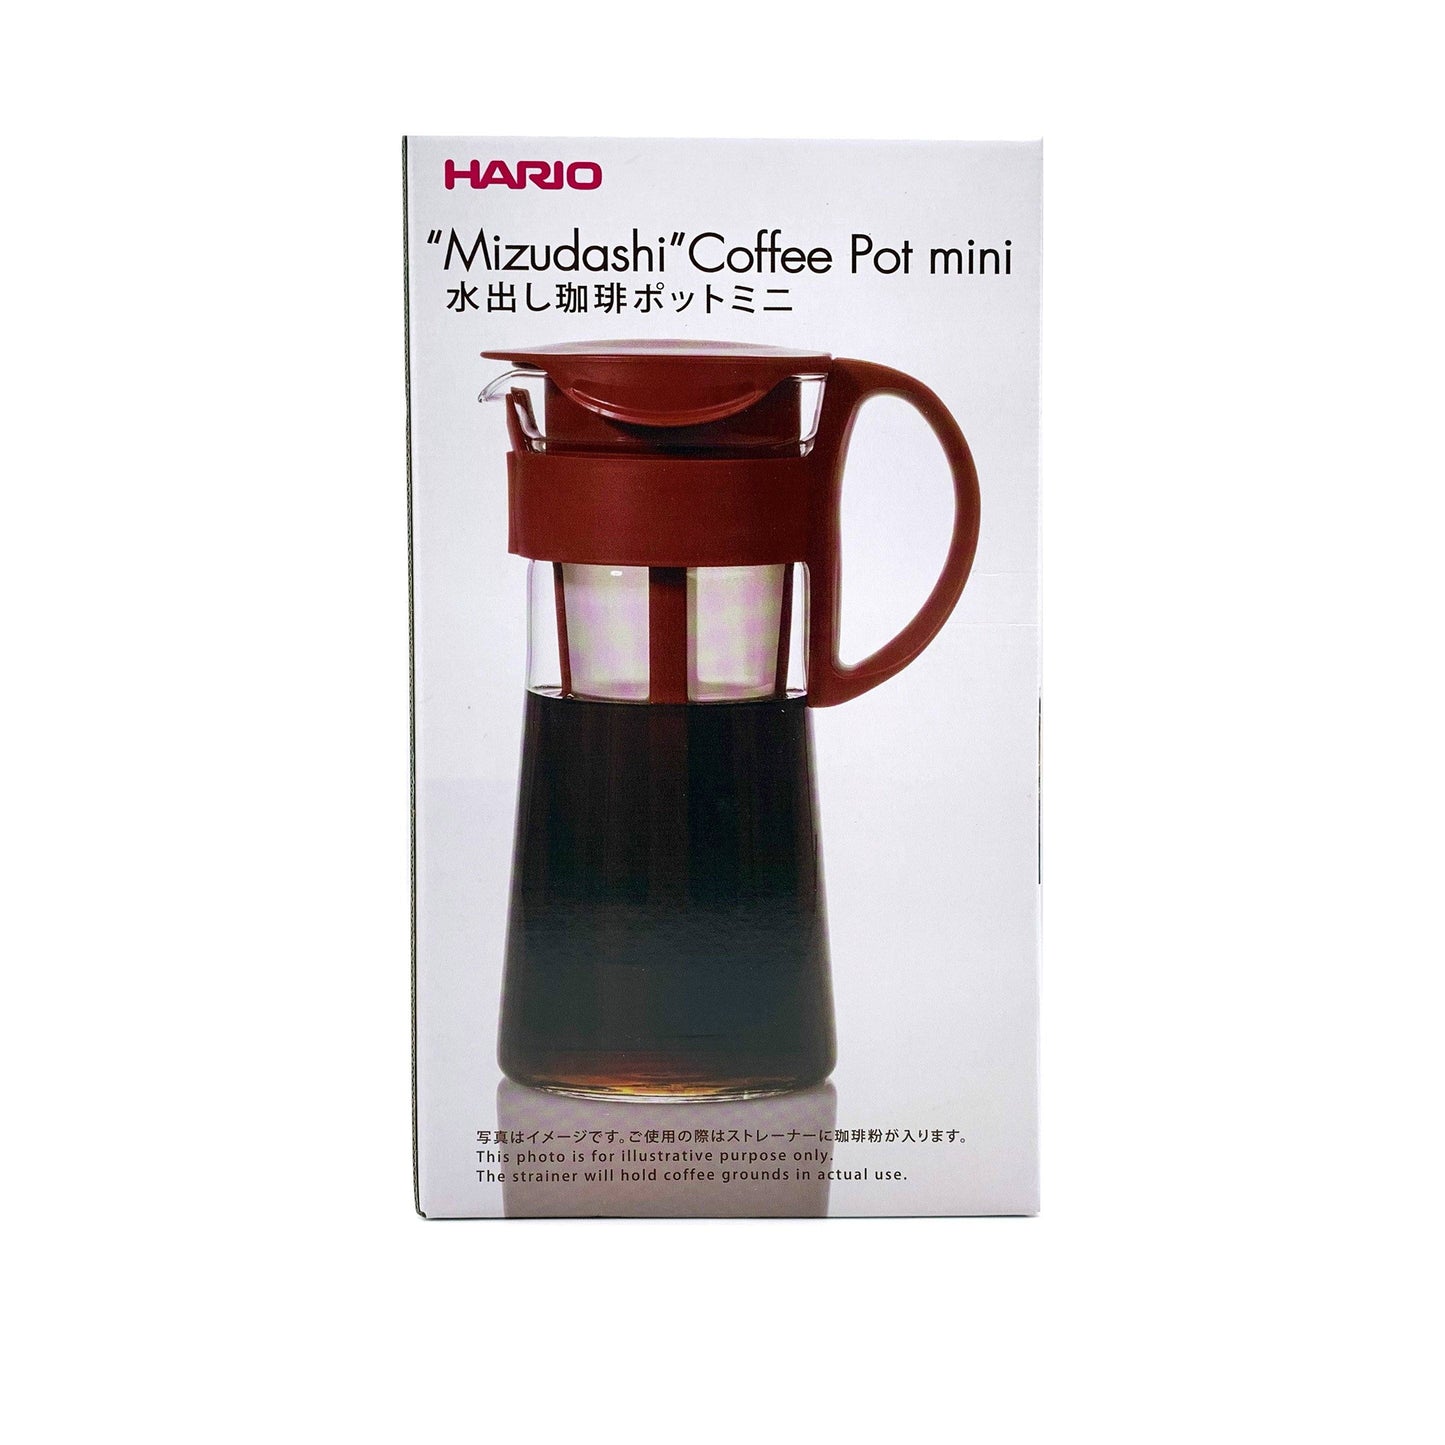 Hario 'Mizudashi' Cold Brew Coffee Pot, 600ml, Red